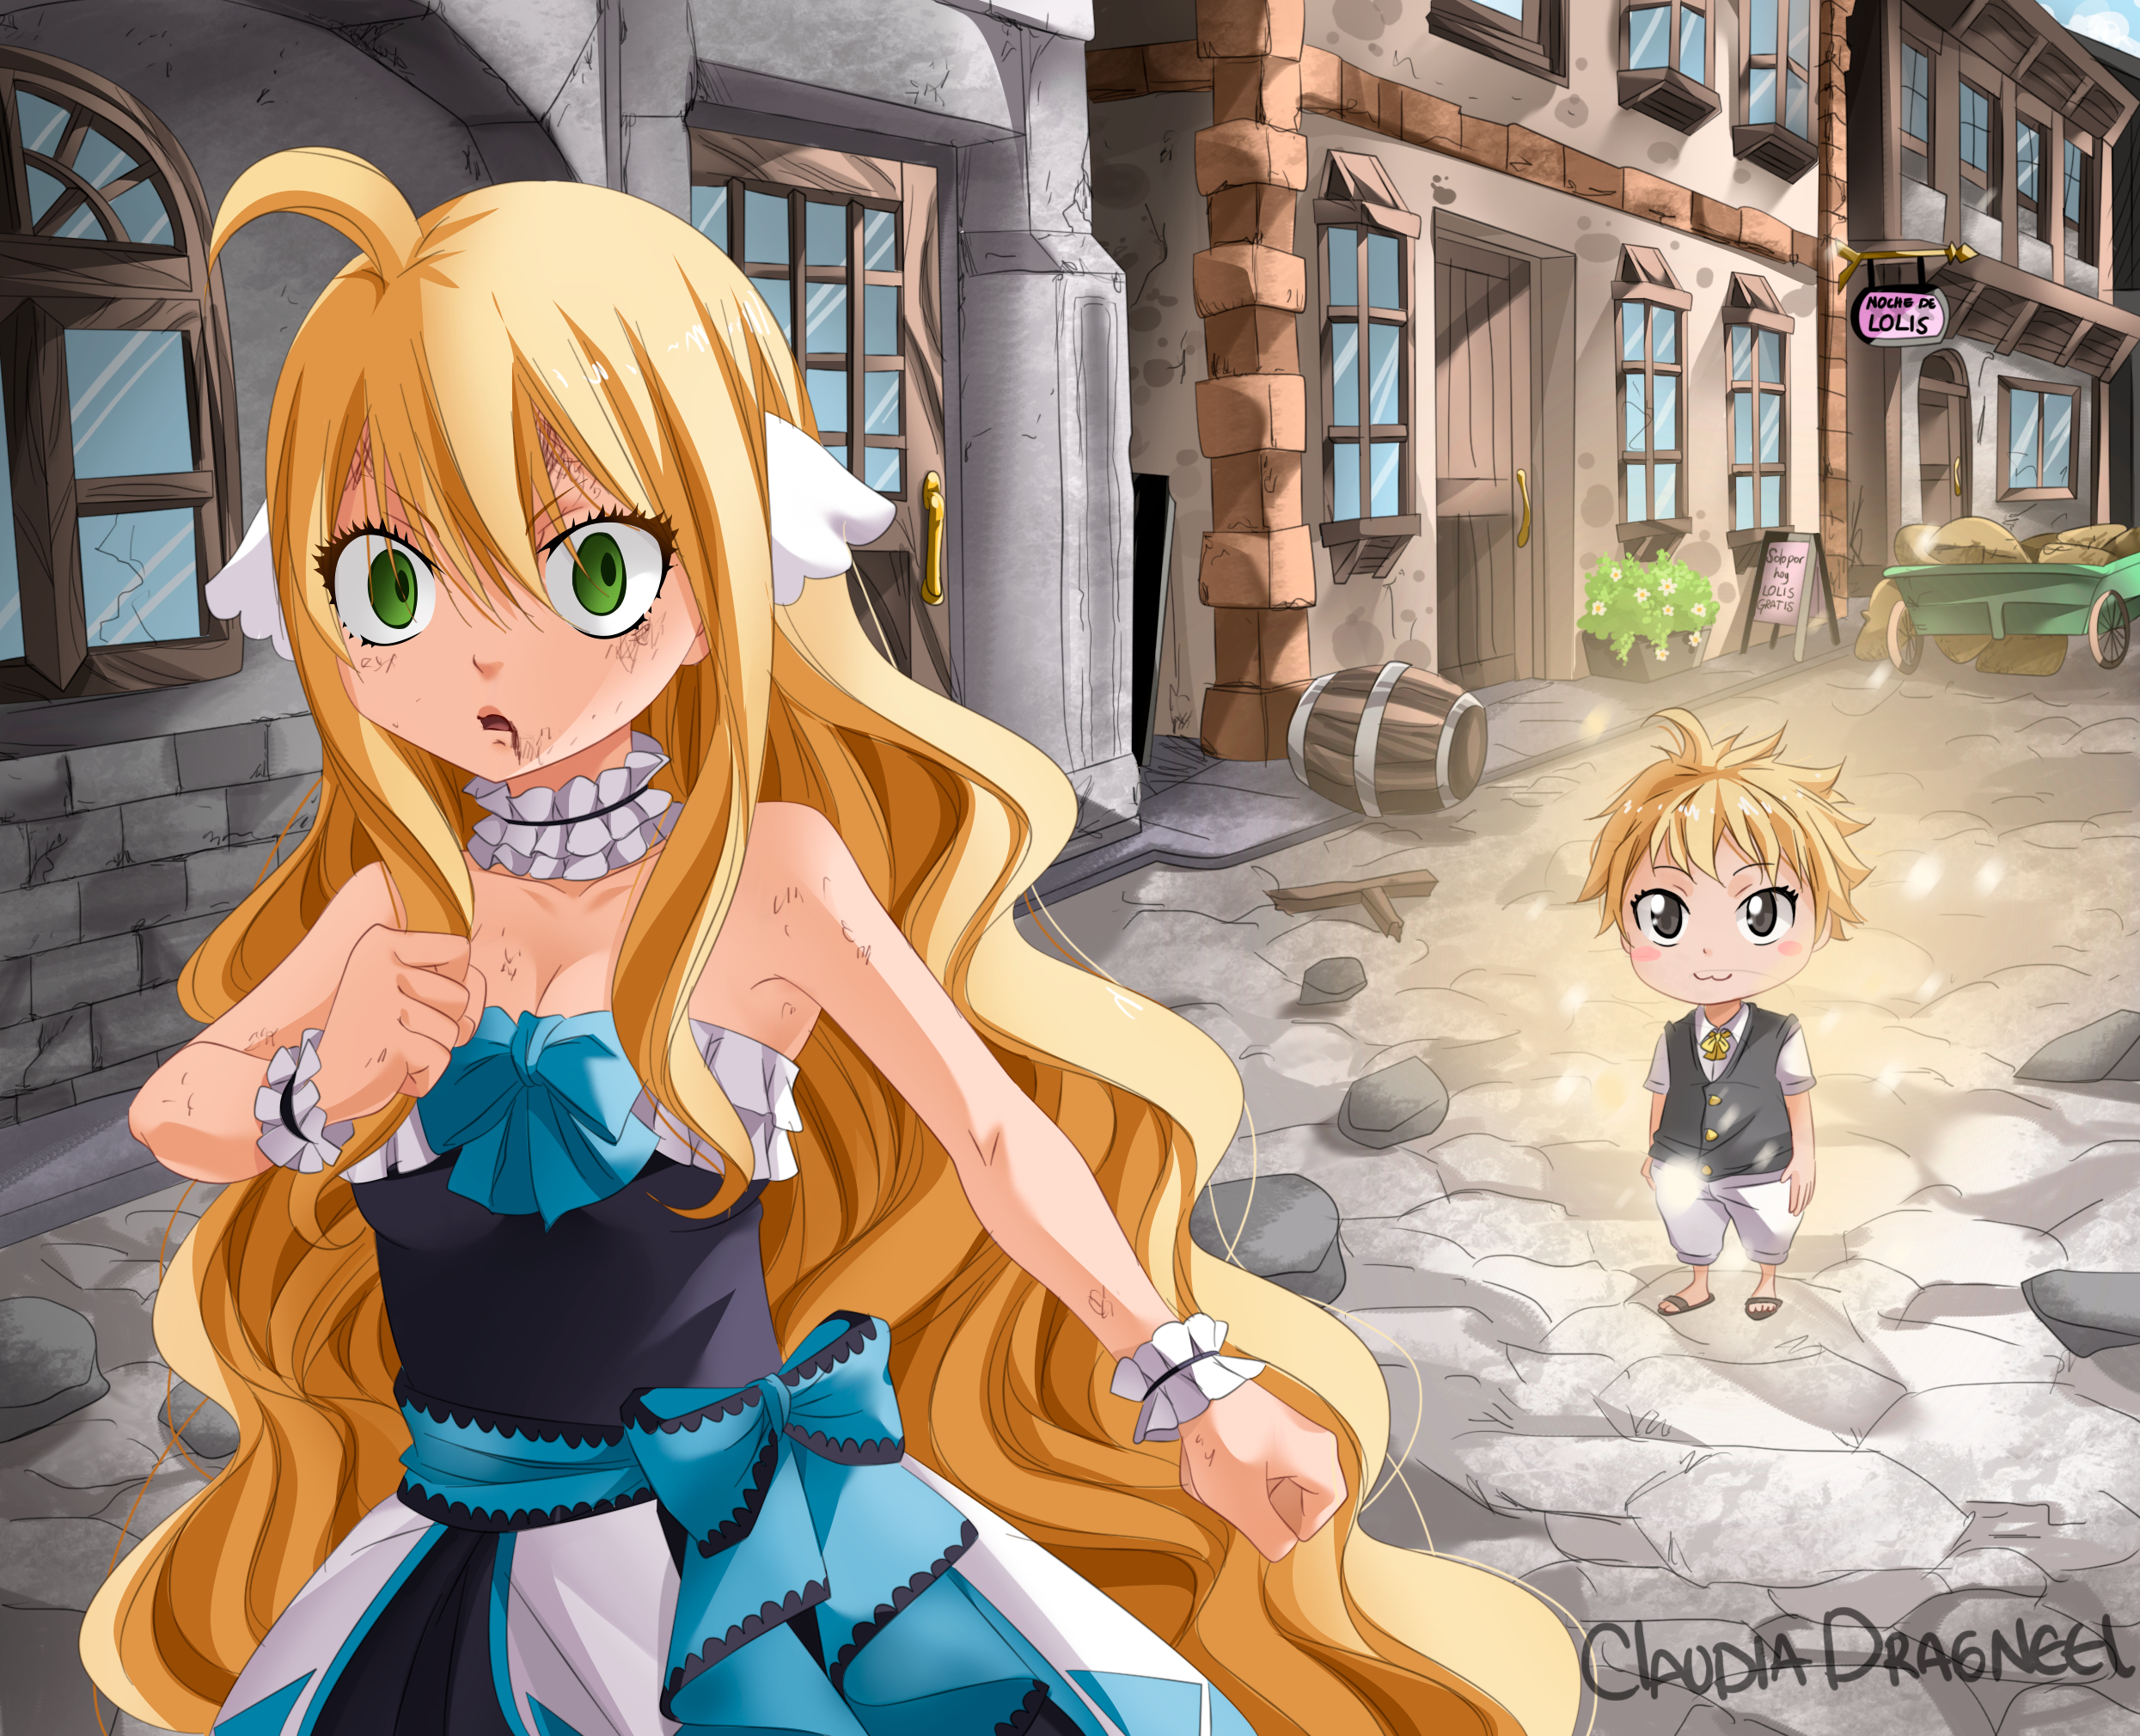 Anime Fairy Tail 4k Ultra HD Wallpaper by Claudiadragneel